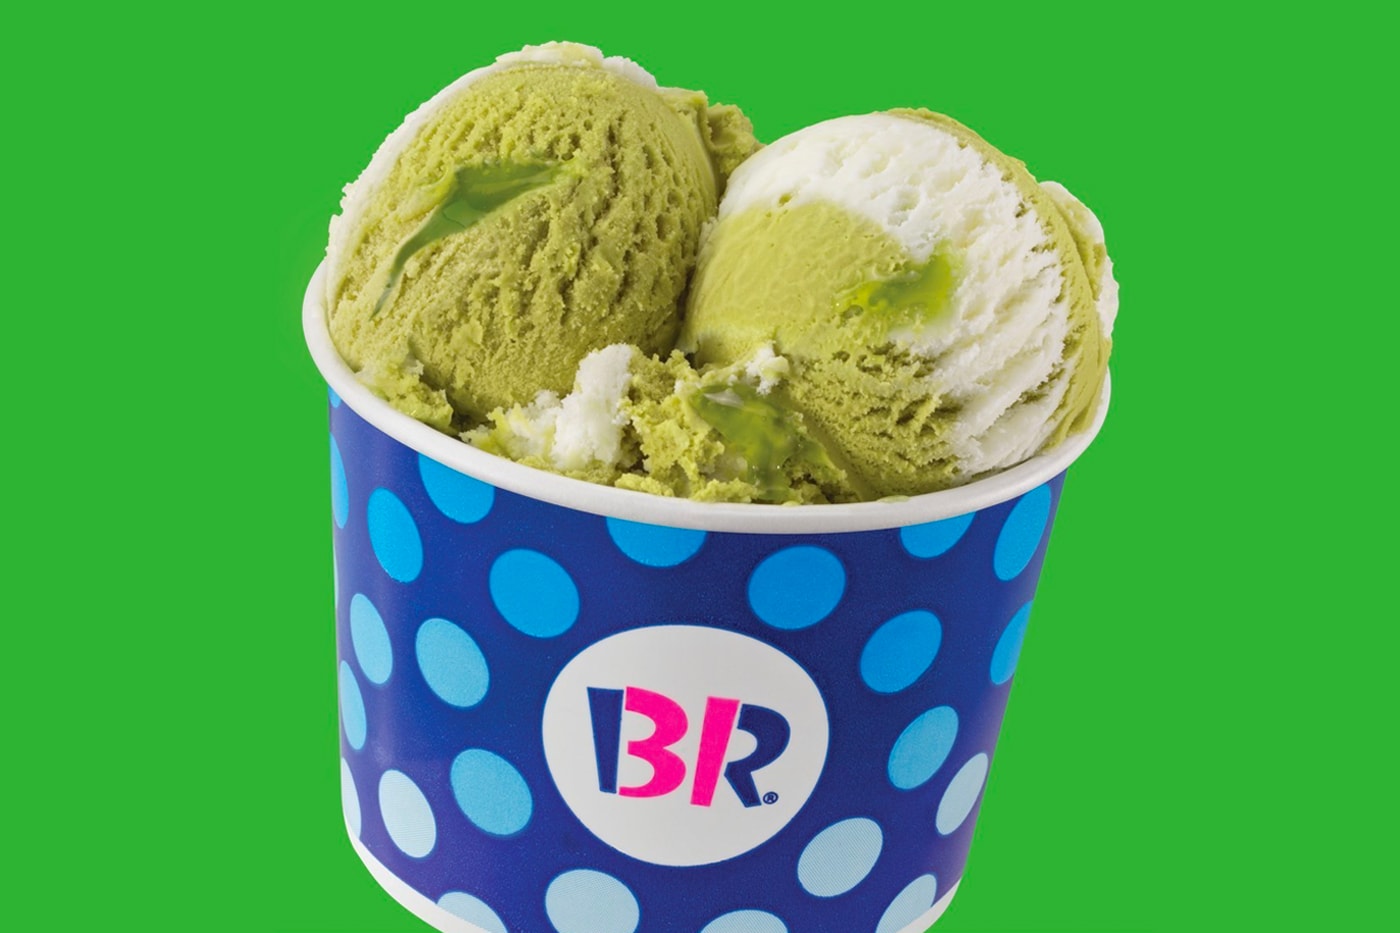 Baskin Robbins New Slime Summer Ice Cream Topping "Sour Berry Slime" "Summertime Lime"